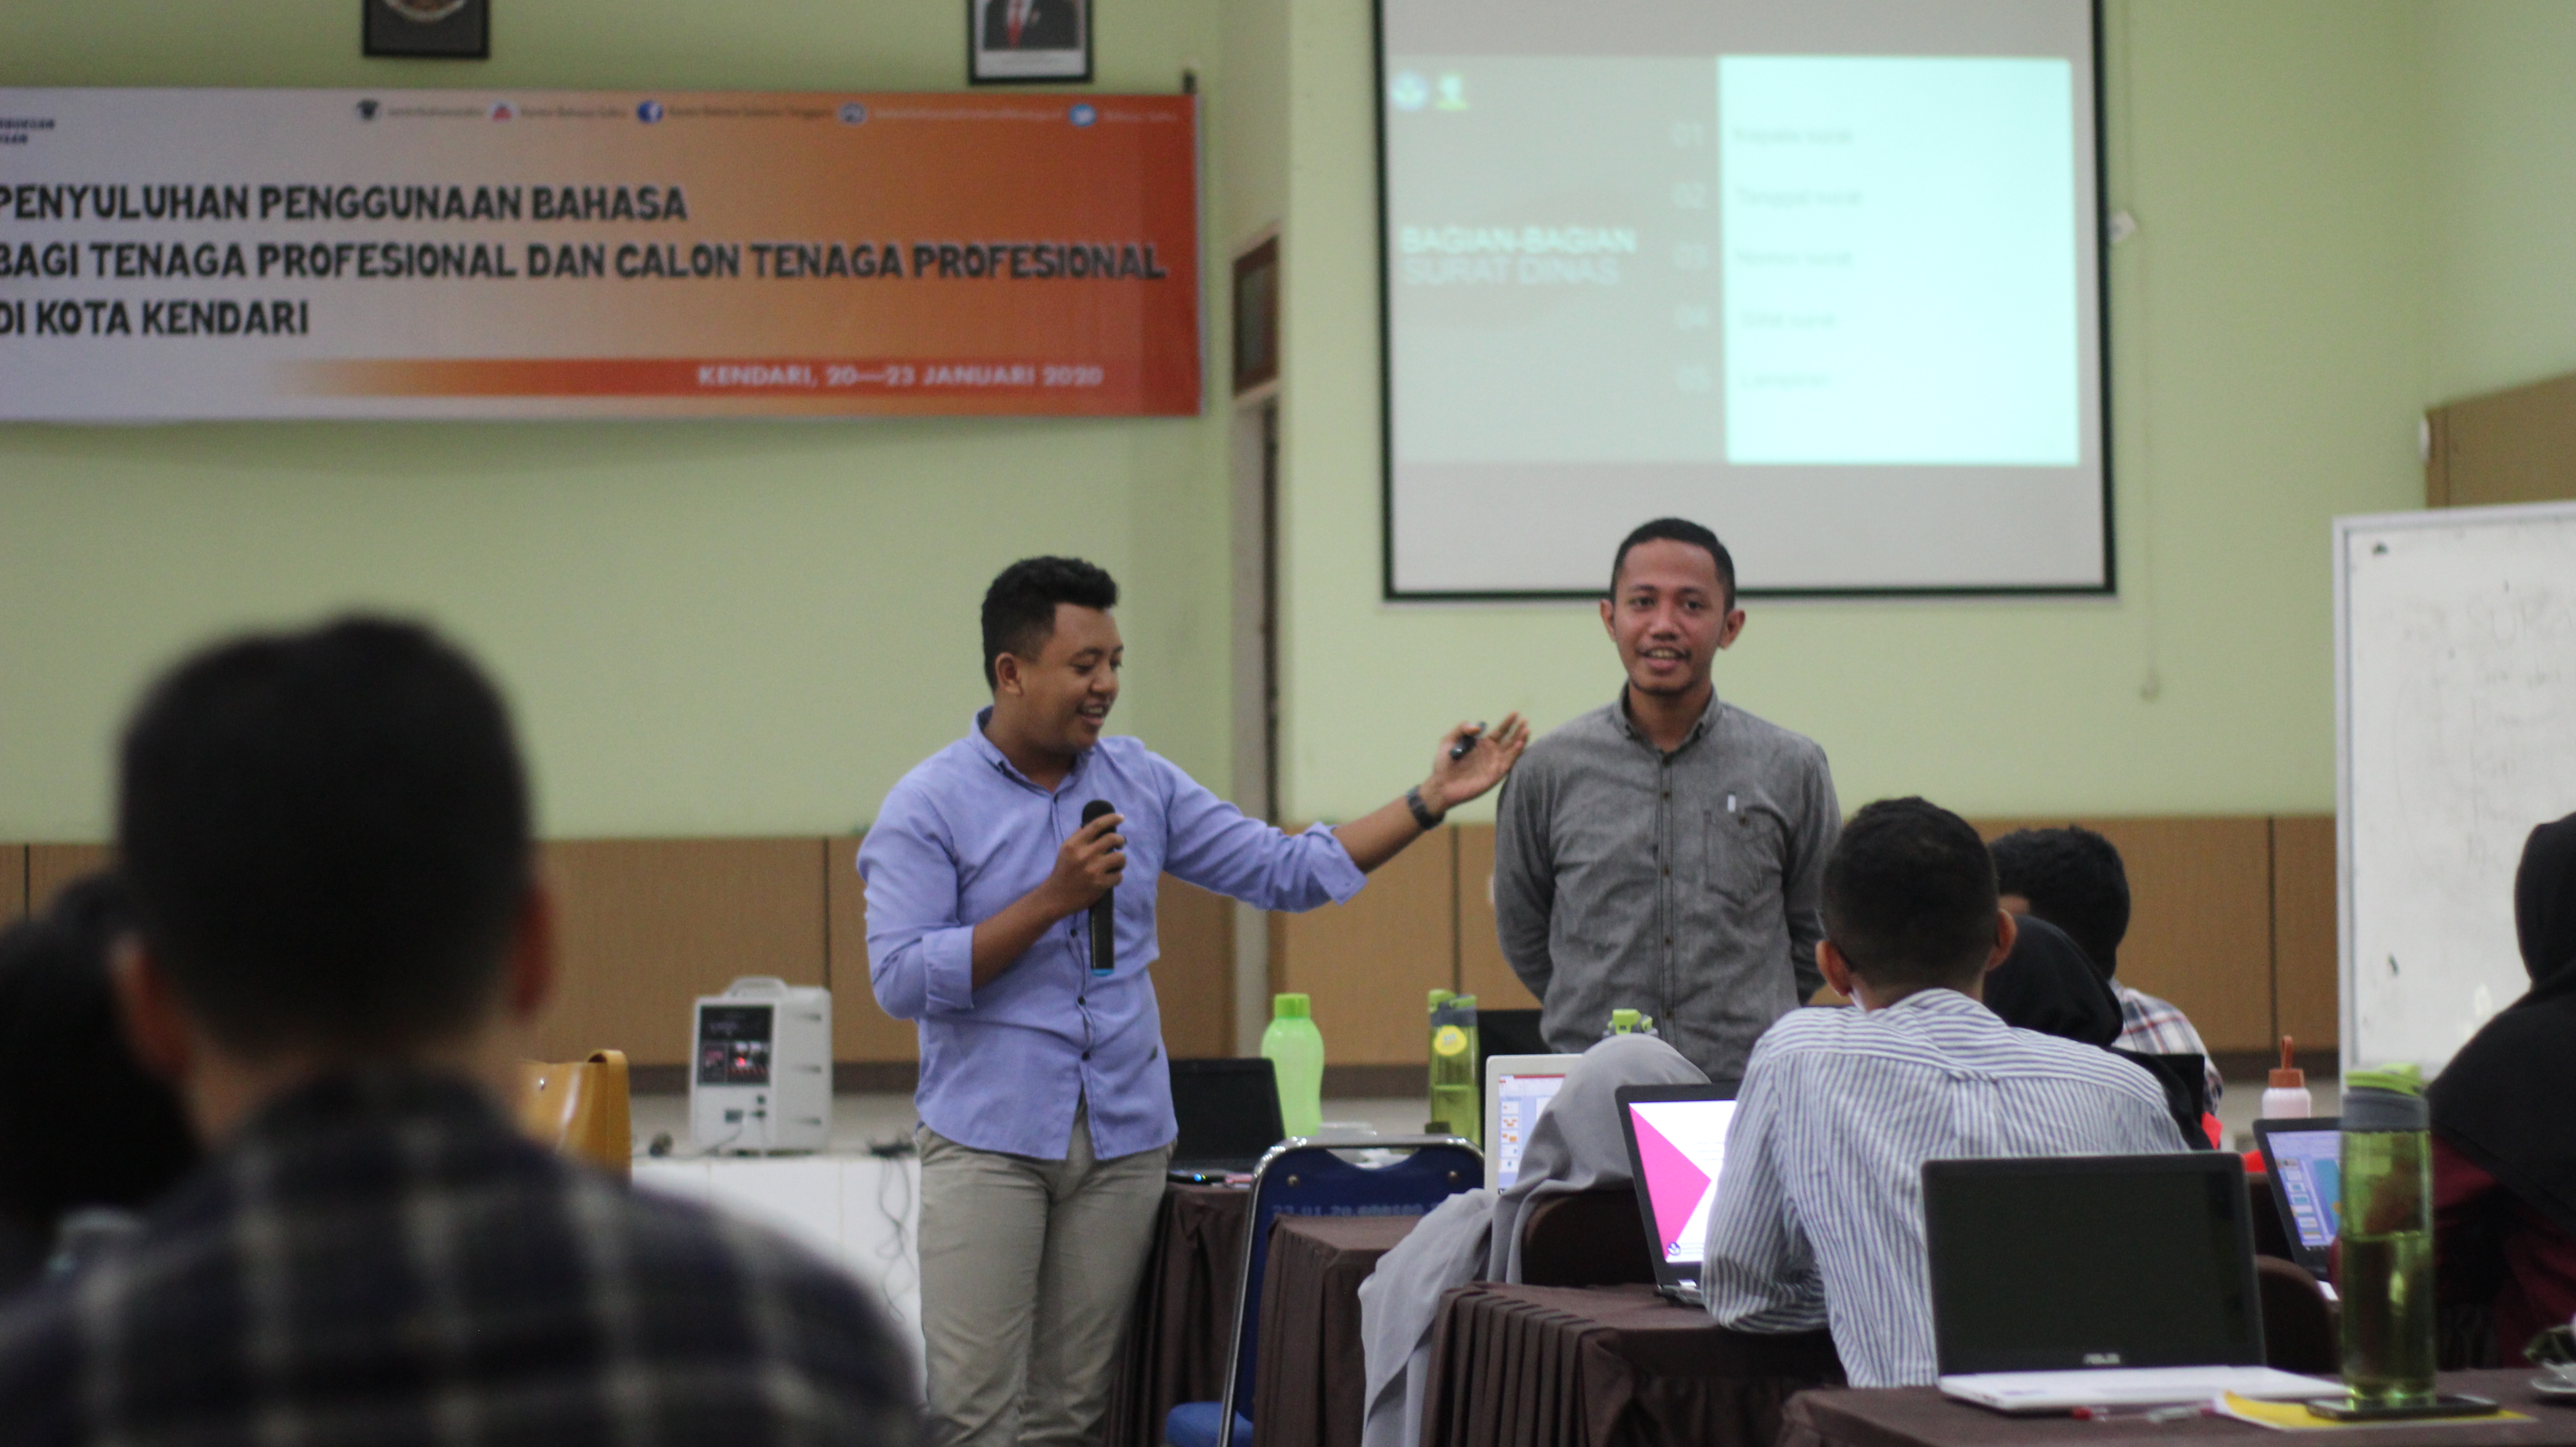 Peningkatan Kapasitas Duta Bahasa Sulawesi Tenggara